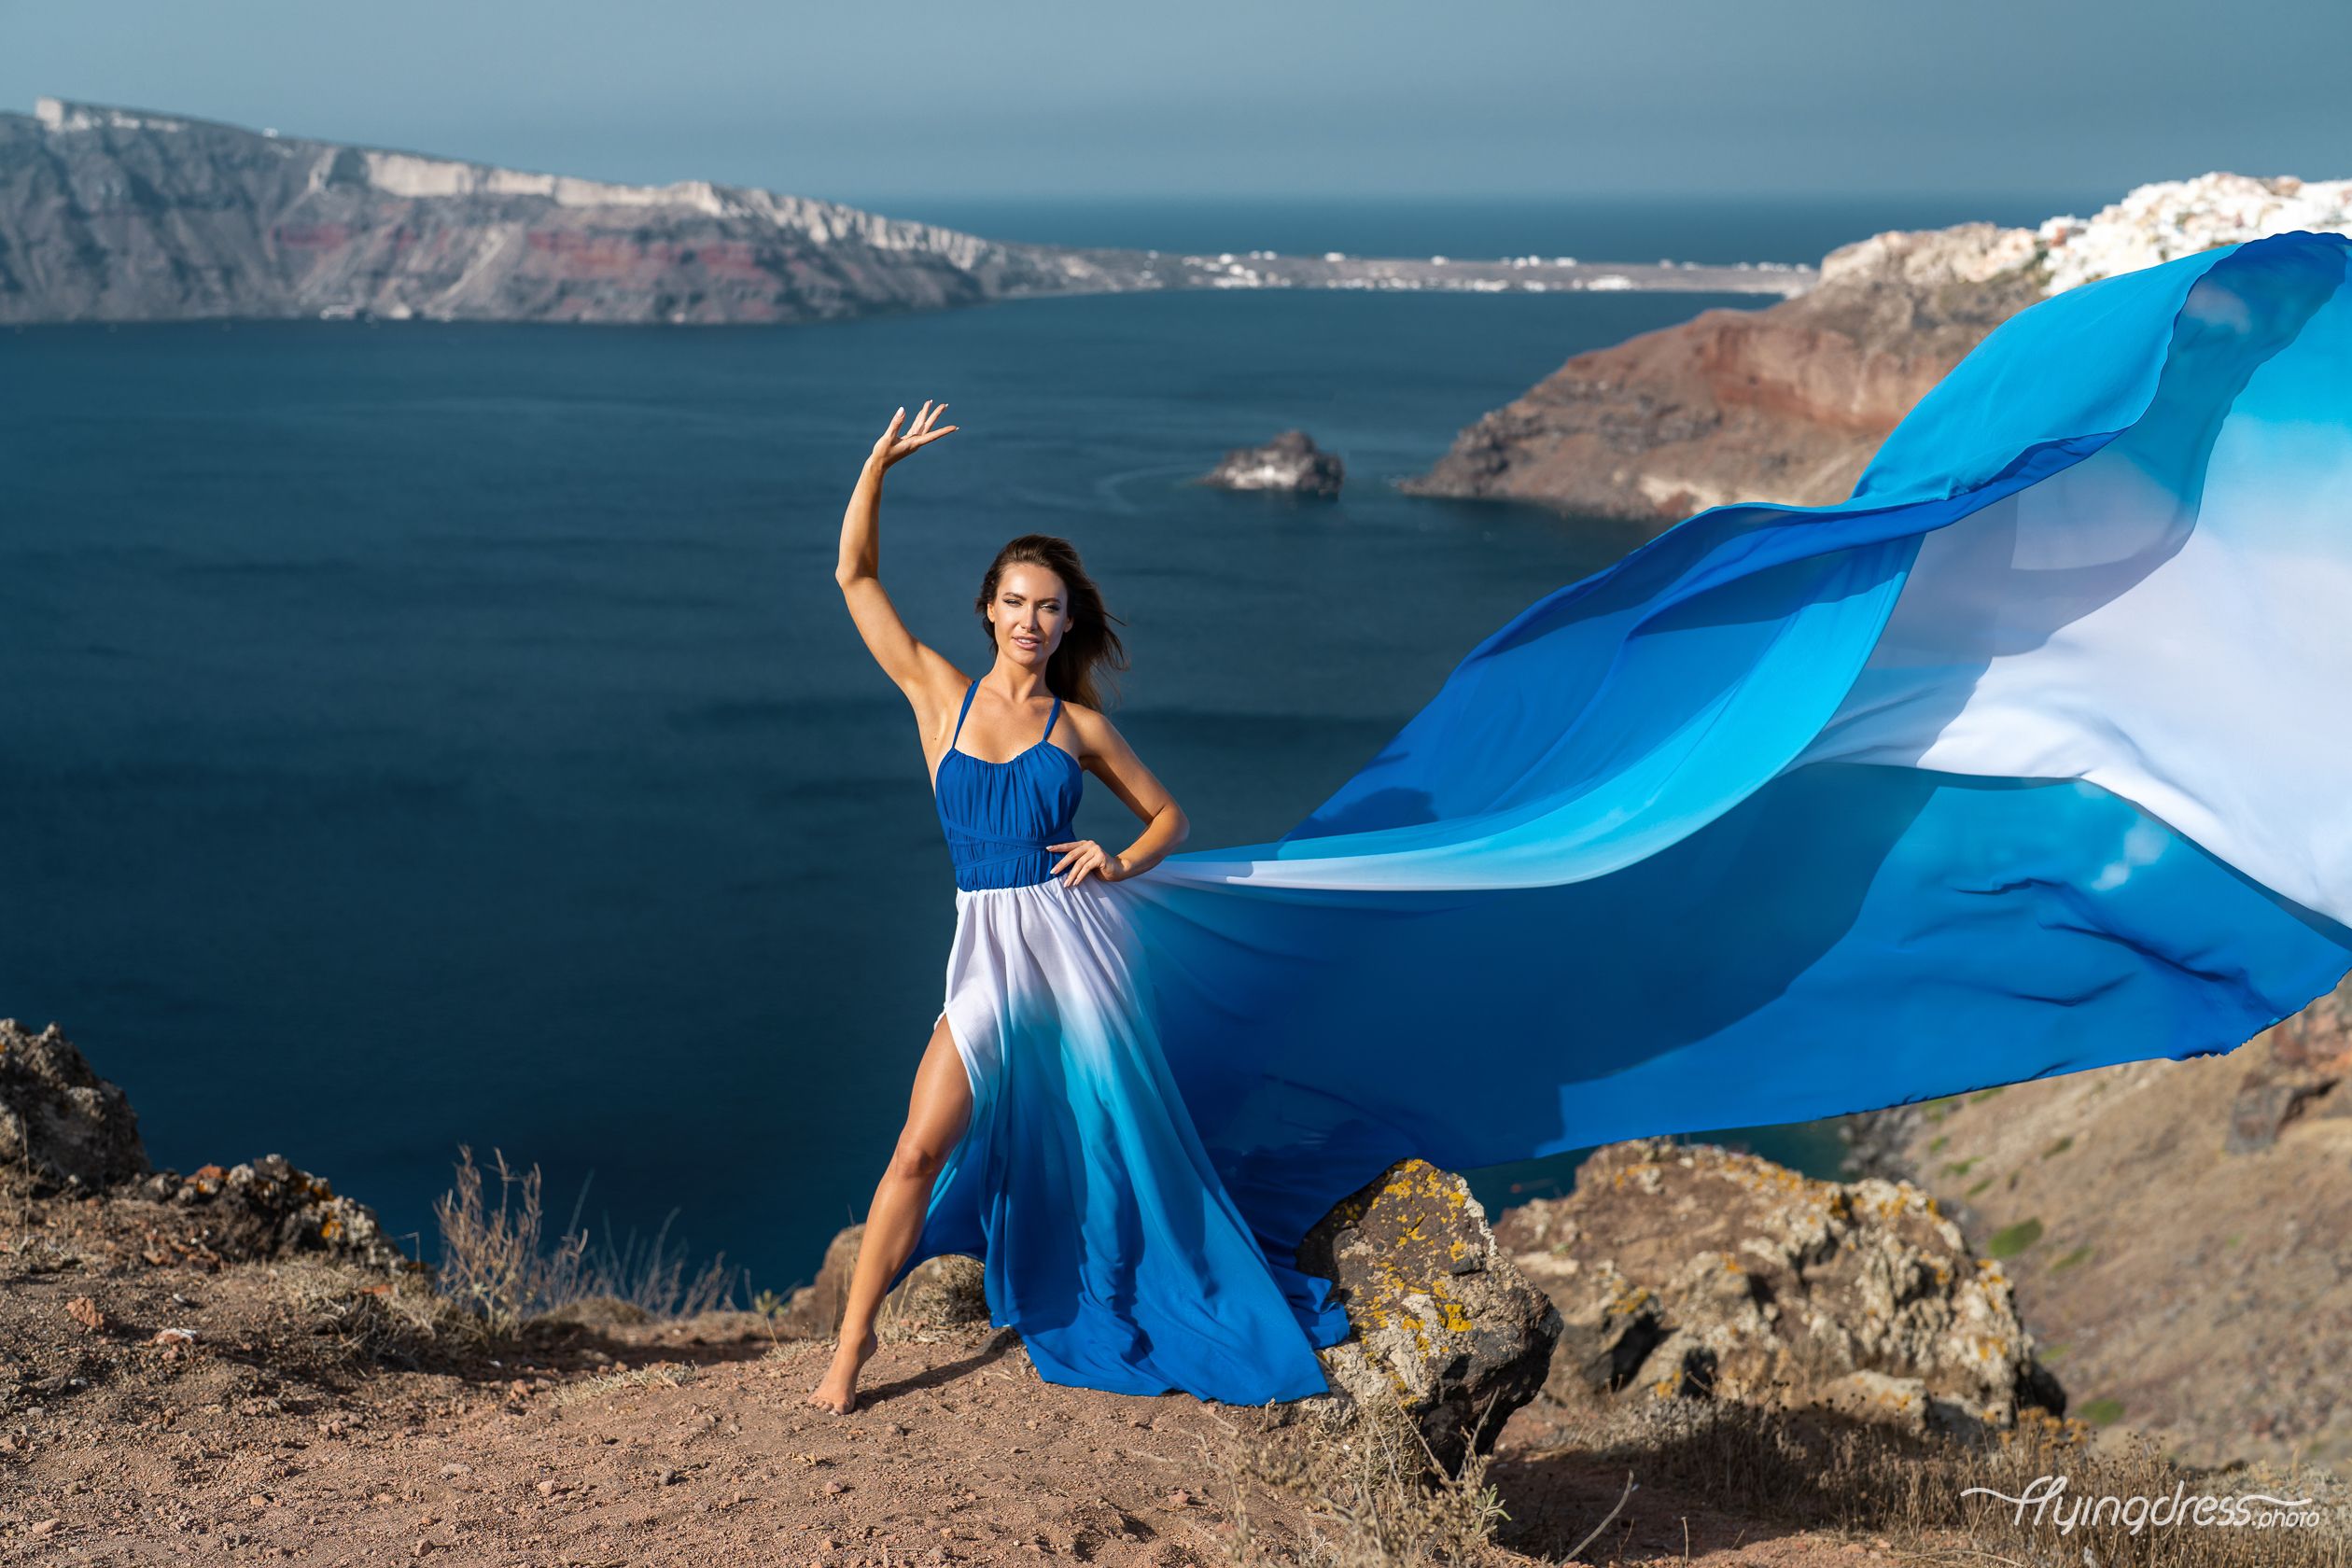 Ombre flying dress shoot in Oia village, Santorini